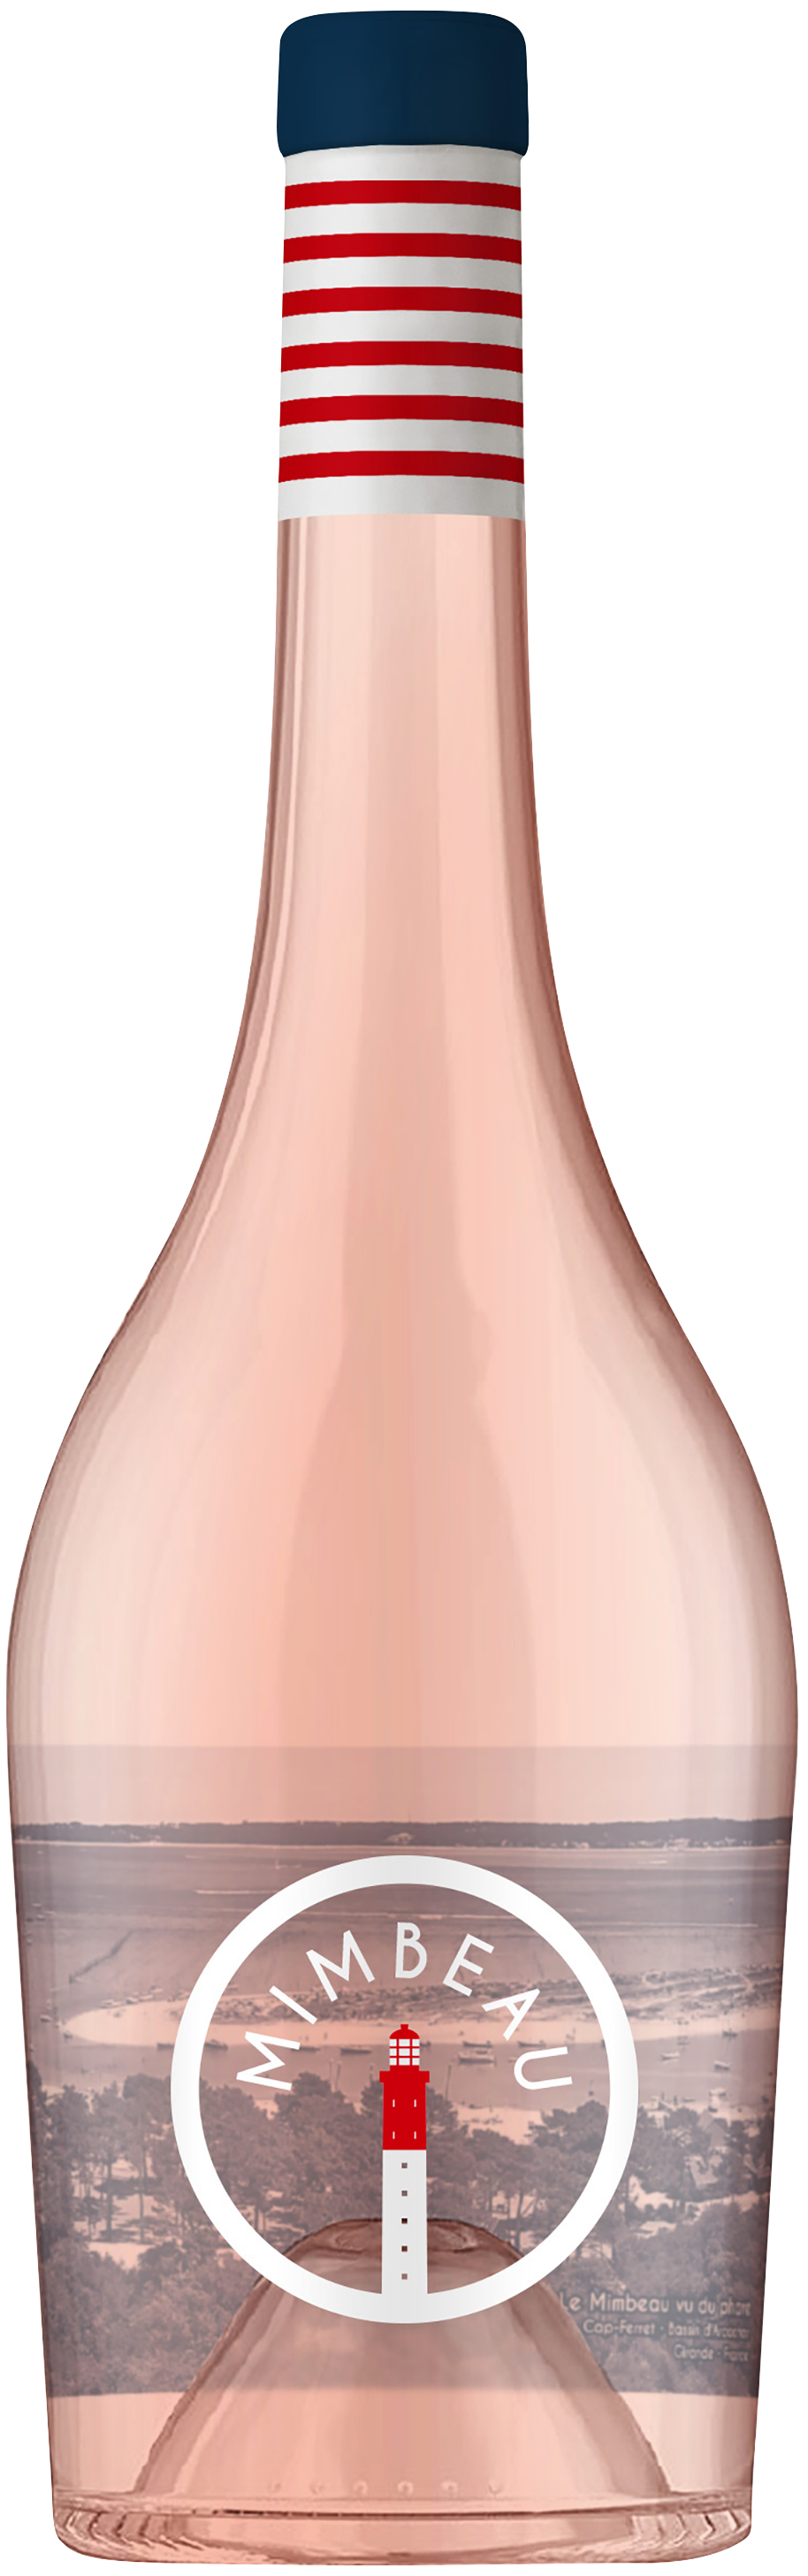 Maison Ginestet Premium Vinotasia IGP Atlantique Weinshop Artikel - Mimbeau | Wein Rosé | Preiswert